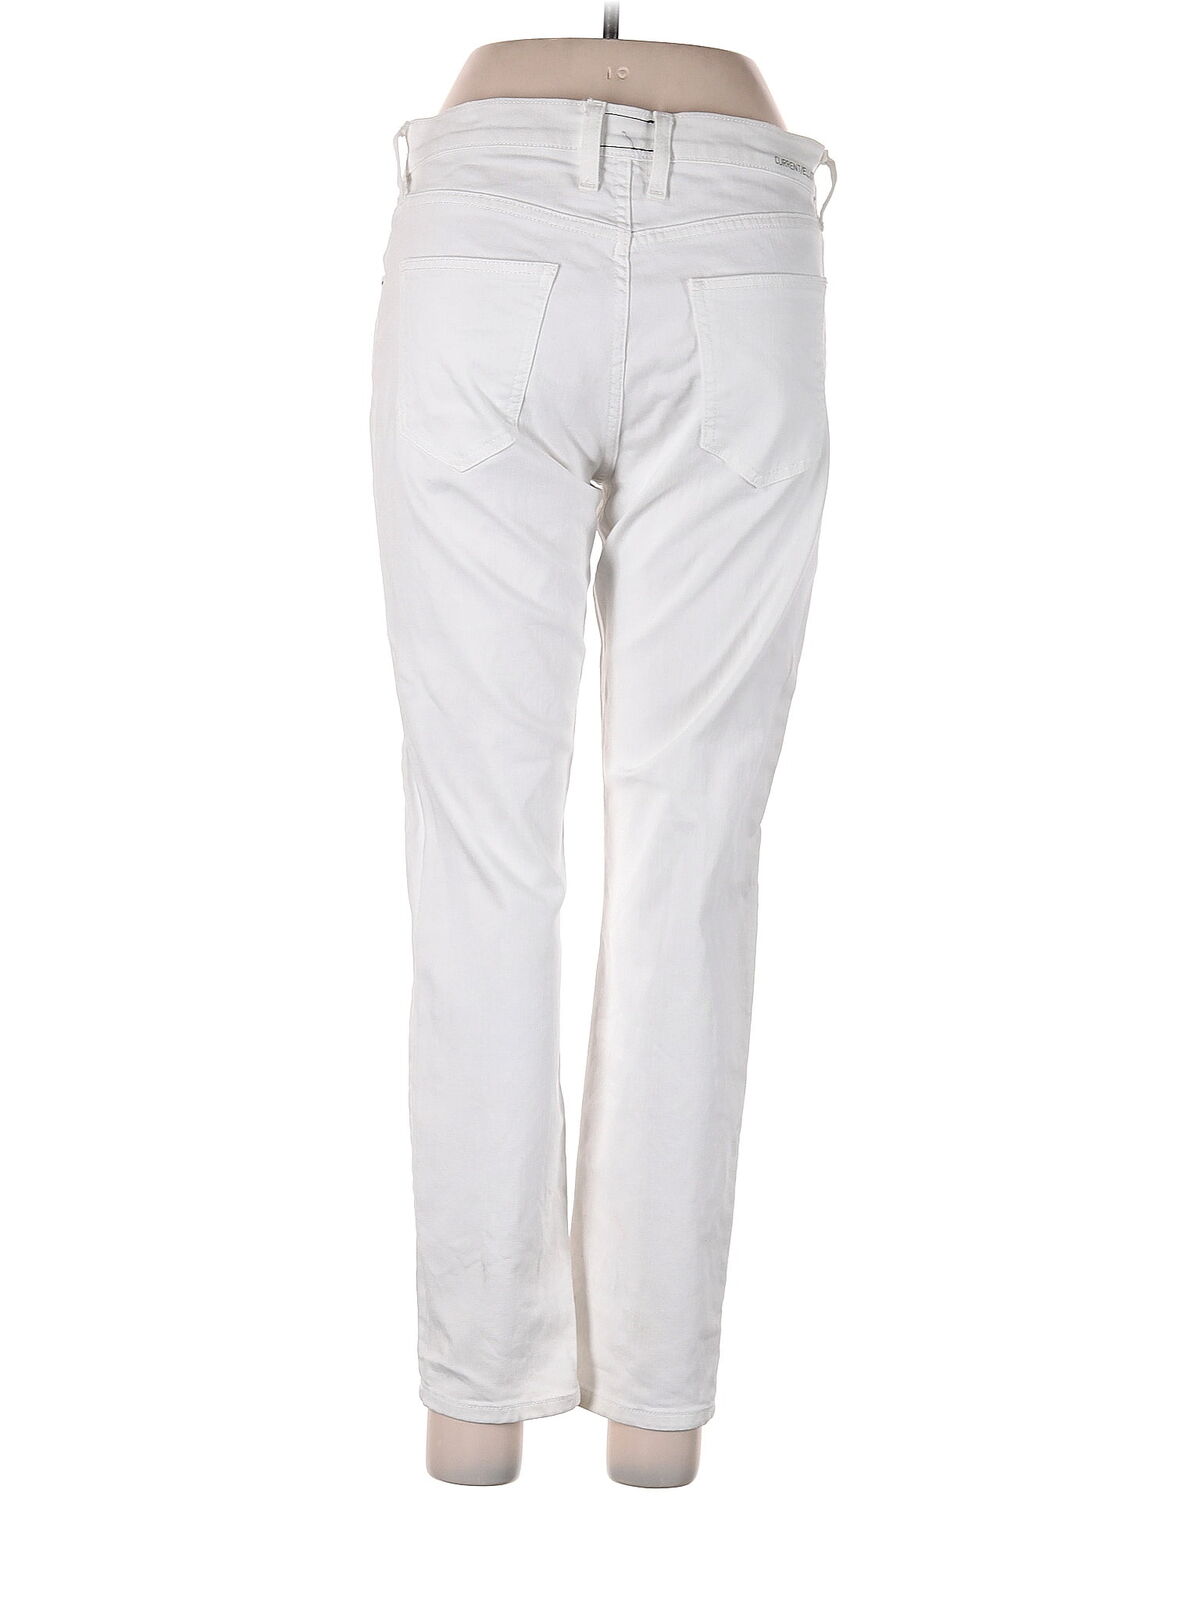 Current/Elliott Women Ivory Jeans 28W - image 2